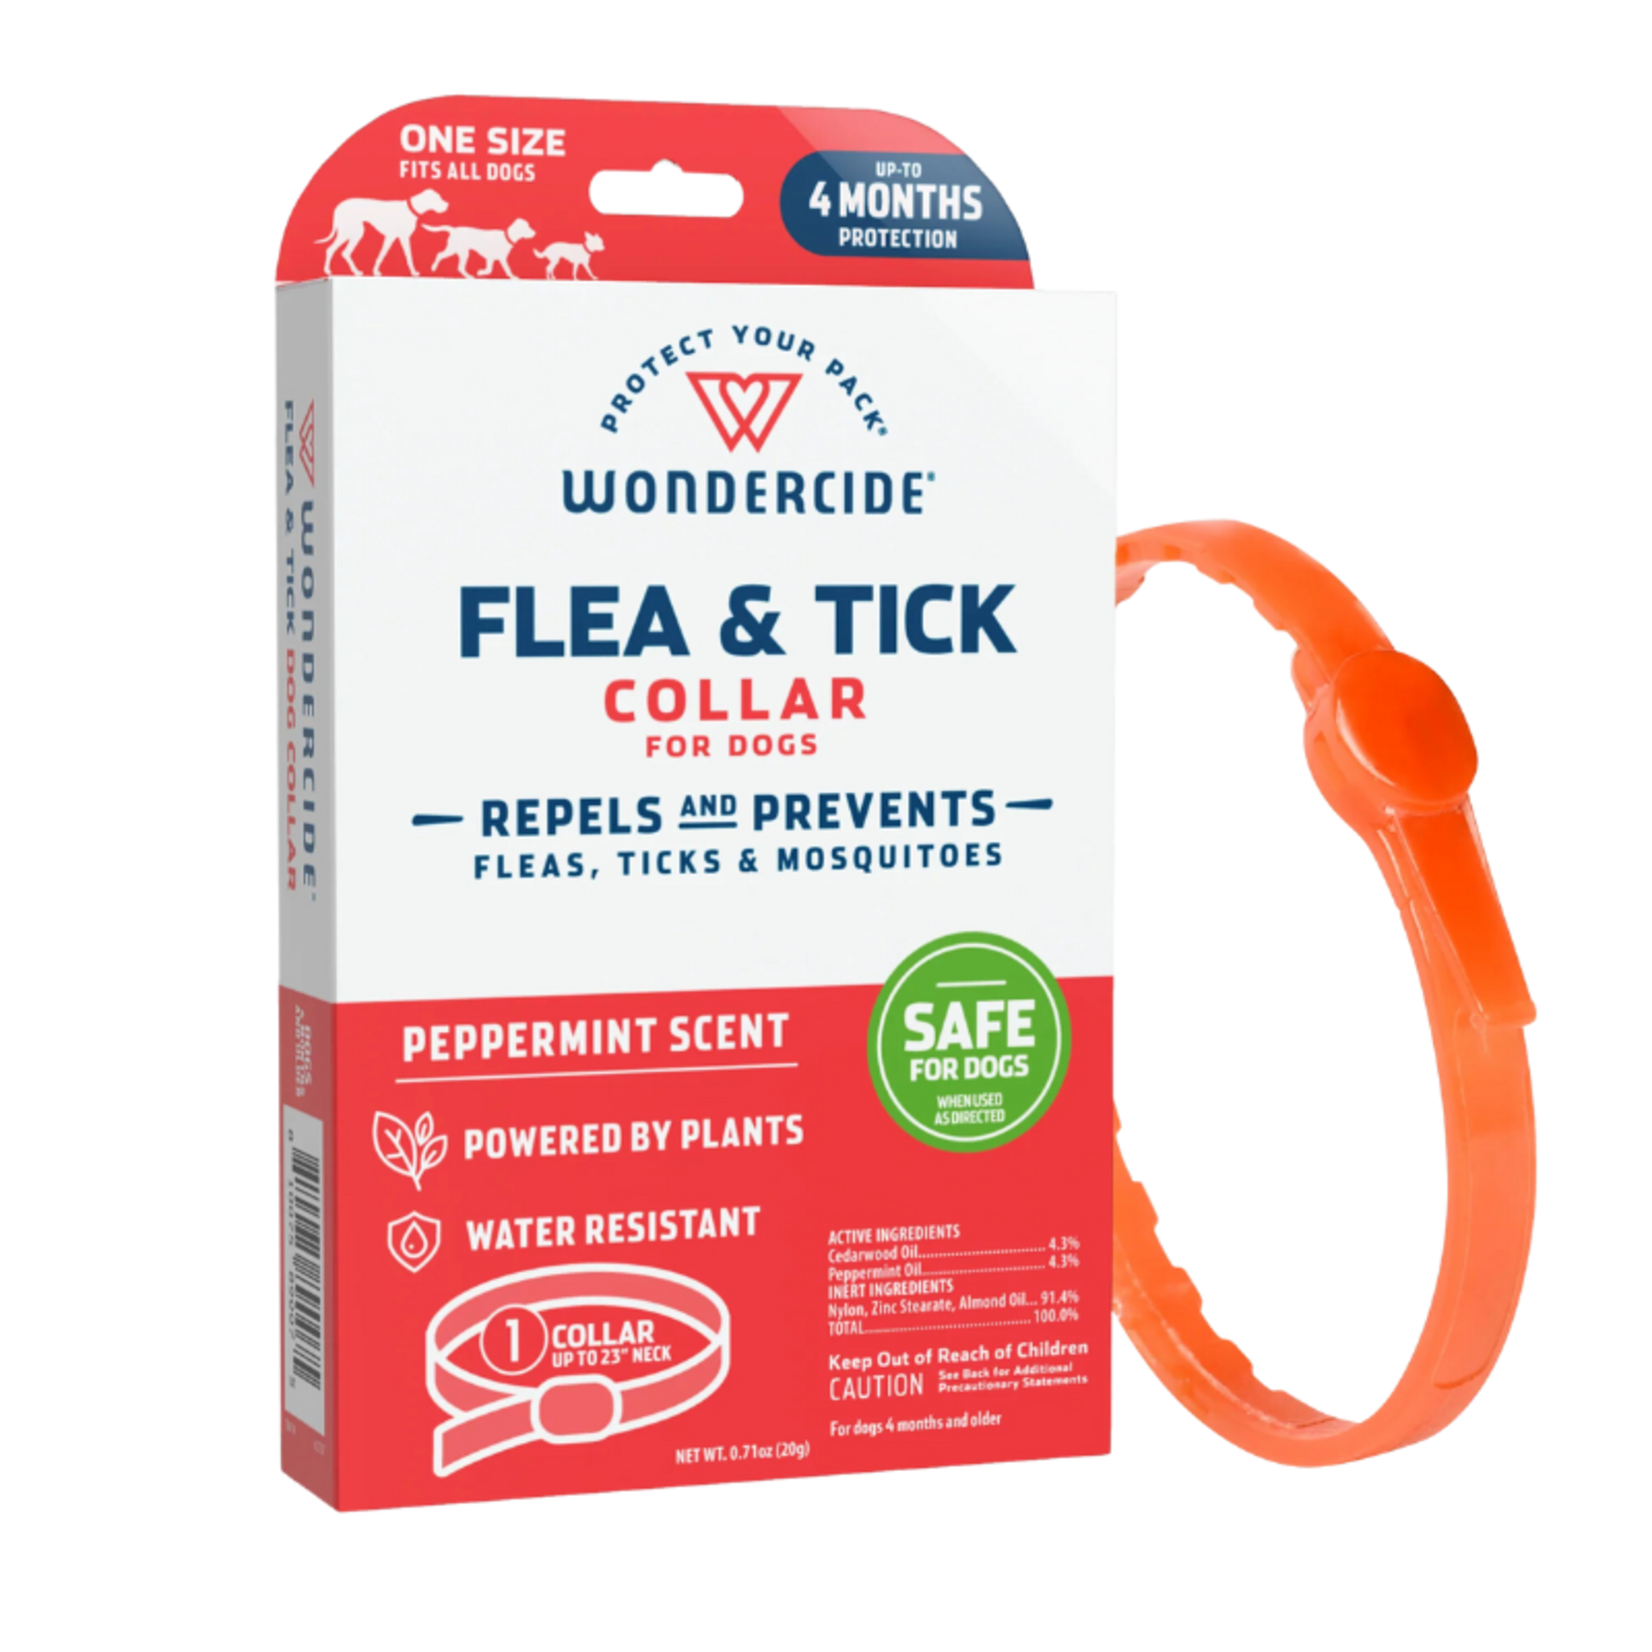 Wondercide Plant-Powered Flea & Tick Collar - For Dogs - One Size - Wondercide